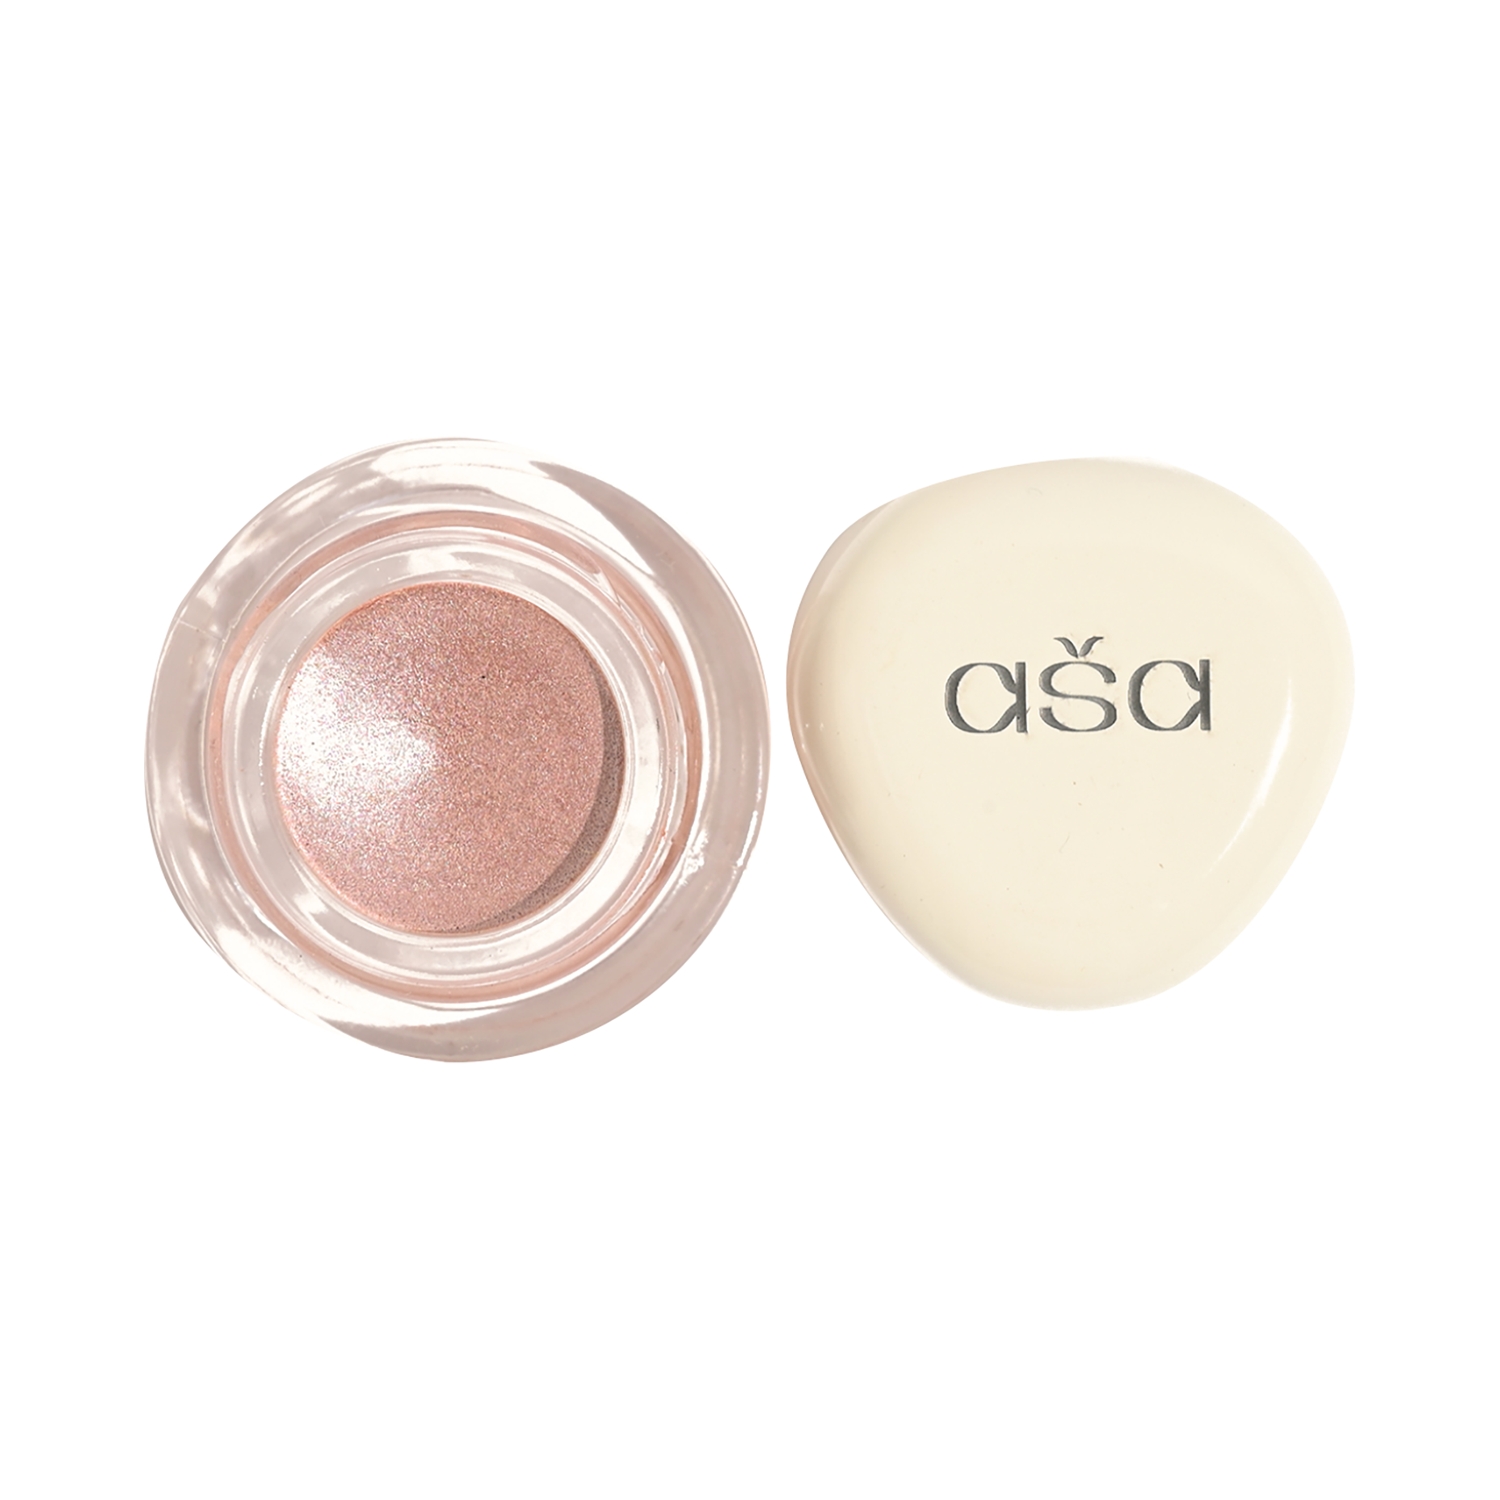 asa beauty | asa beauty Creme Highlighter - Dusty Rose (3.8g)